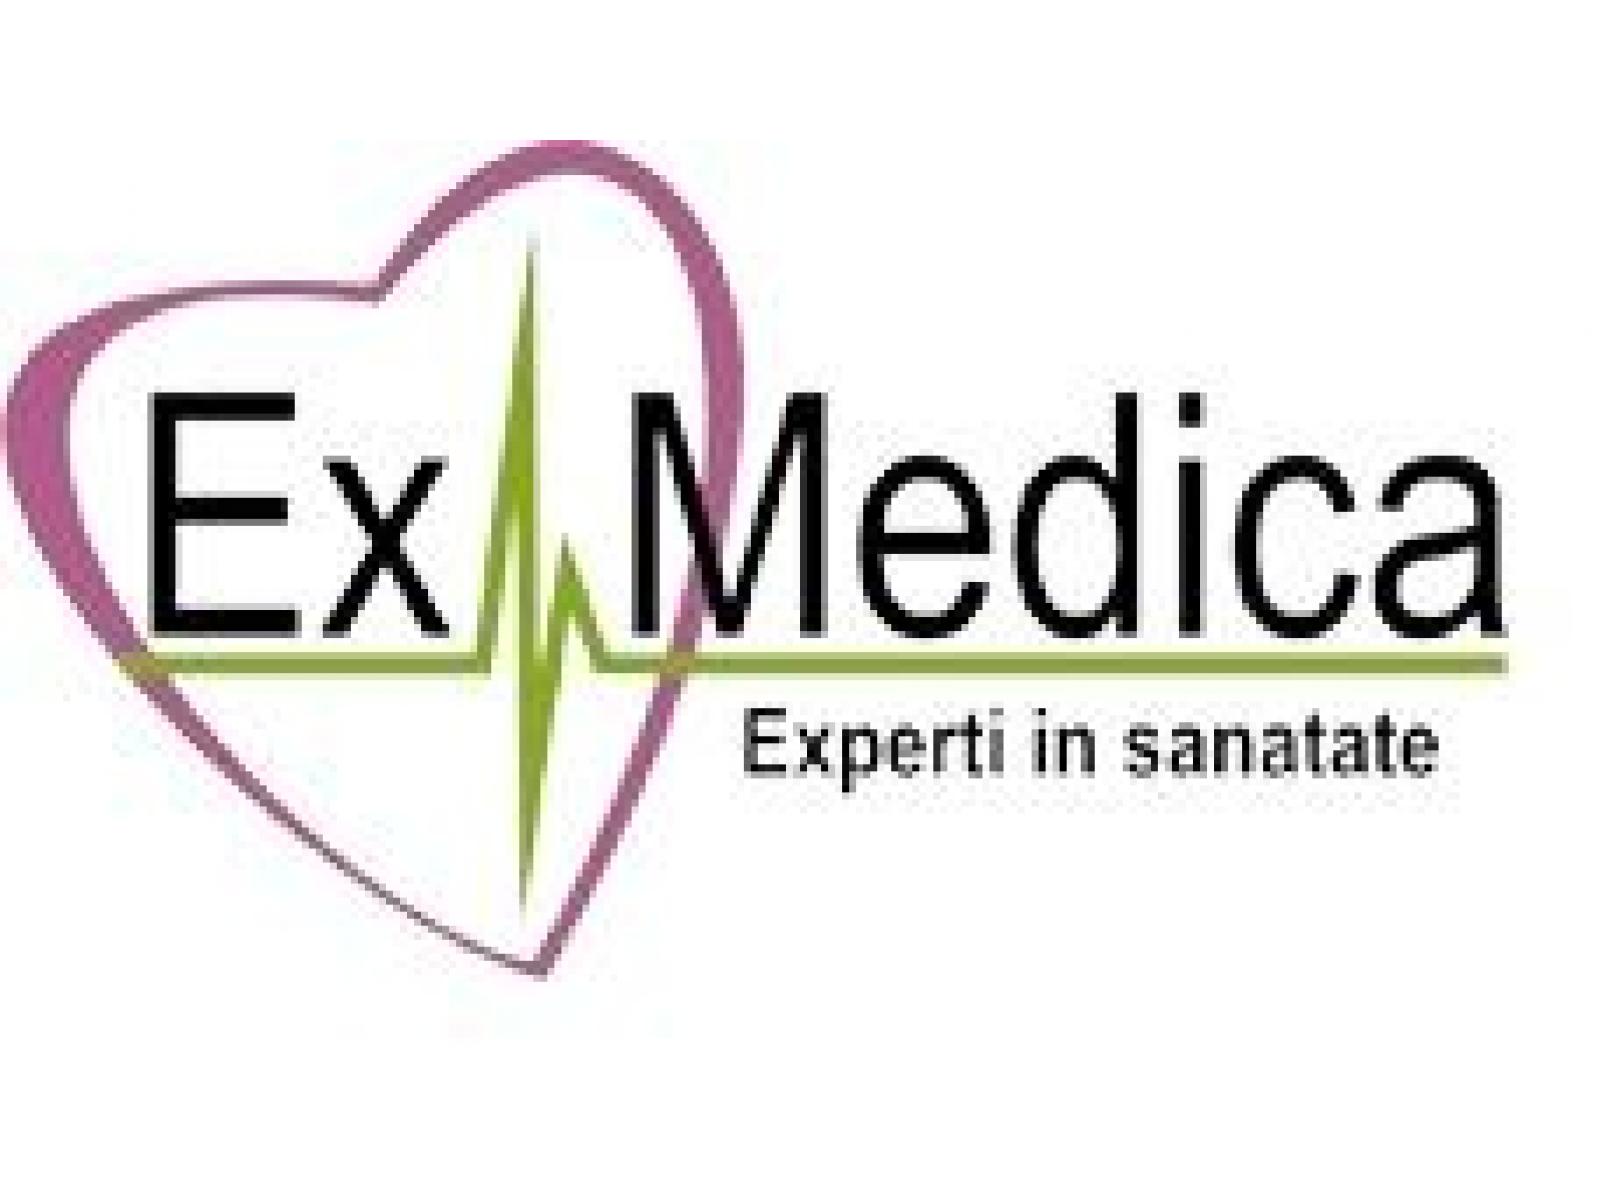 Exmedica - logo-exmedica2.jpg